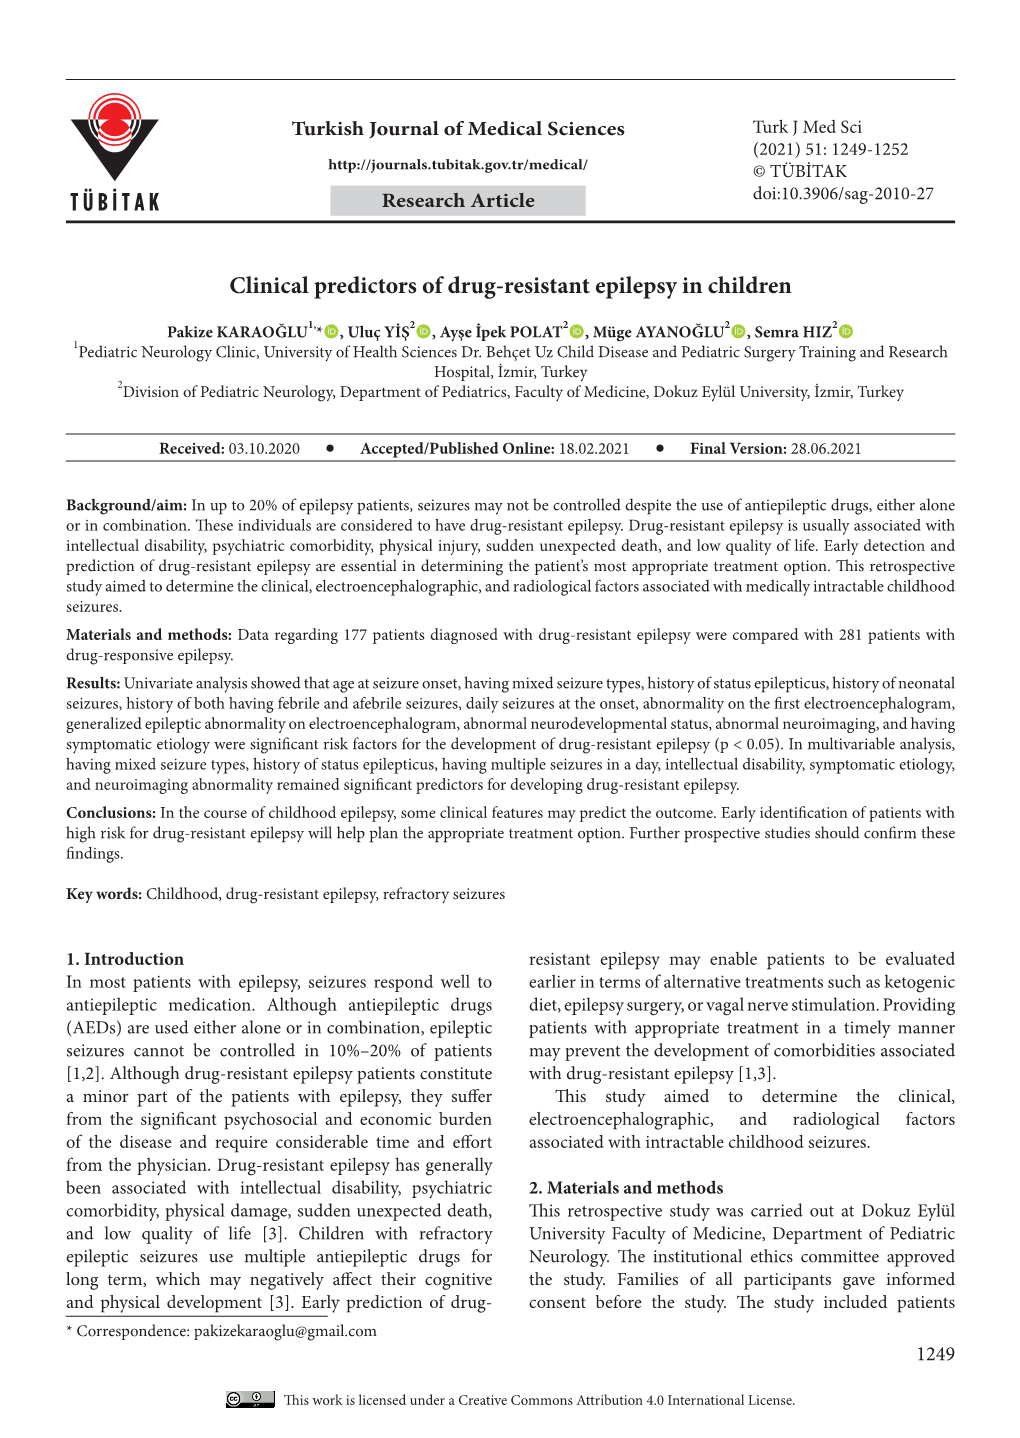 Clinical Predictors of Drug-Resistant Epilepsy in Children